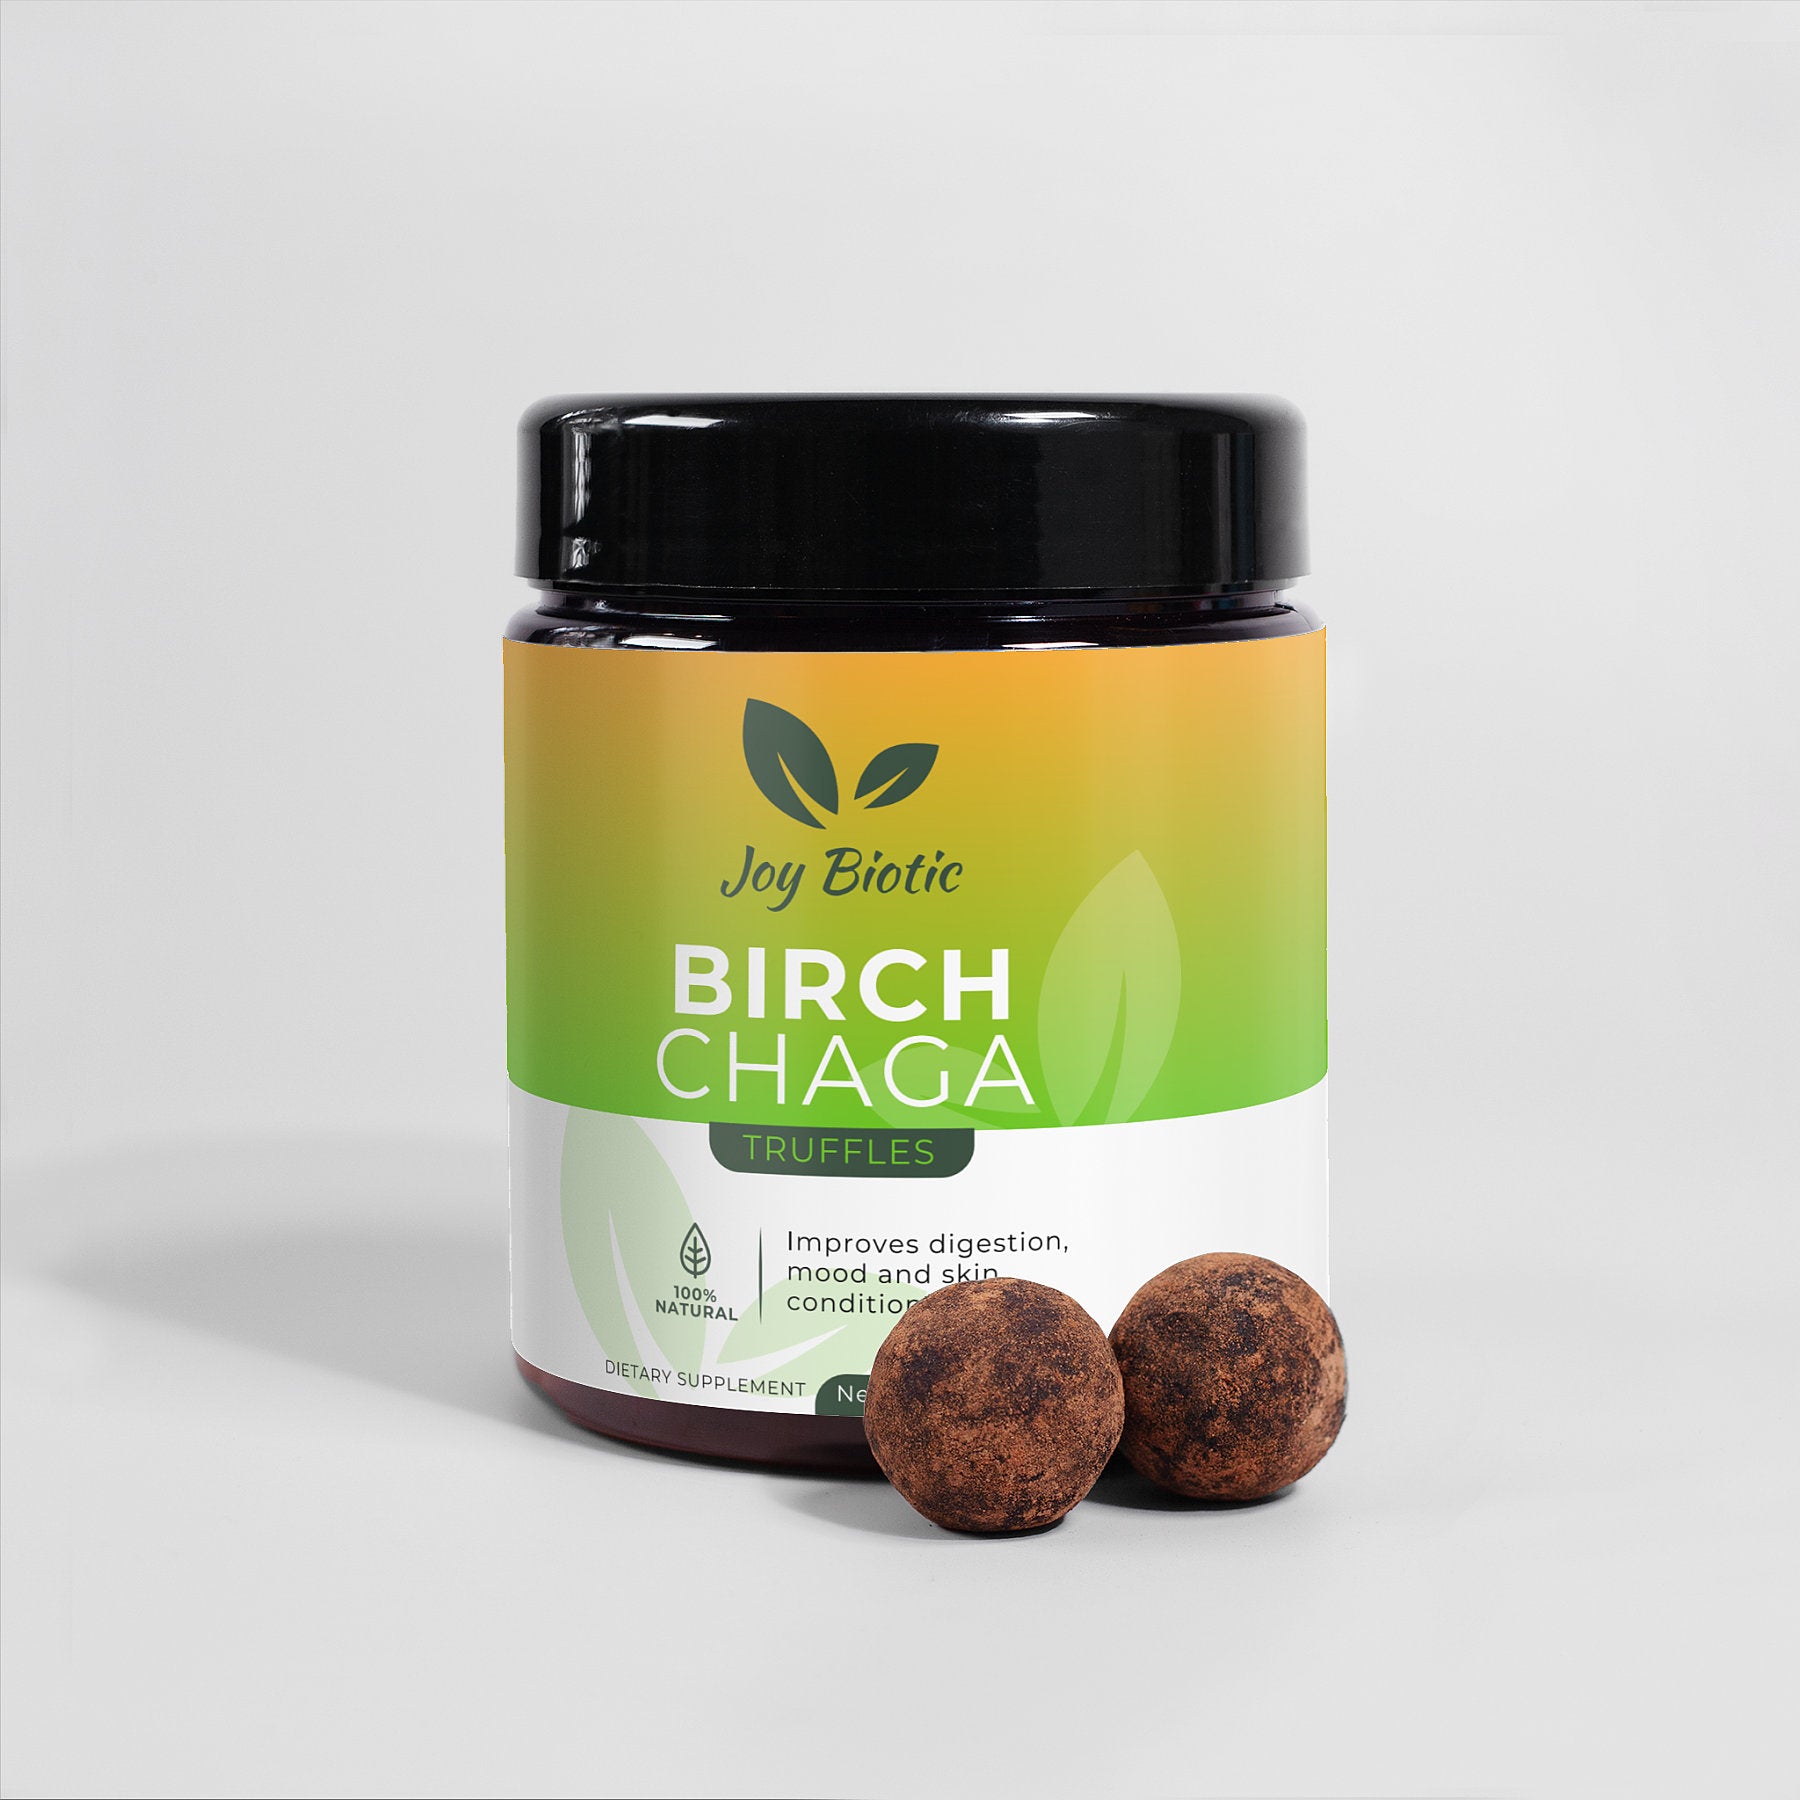 Birch Chaga Truffles | Birch Chaga Supplements | Joy Biotic